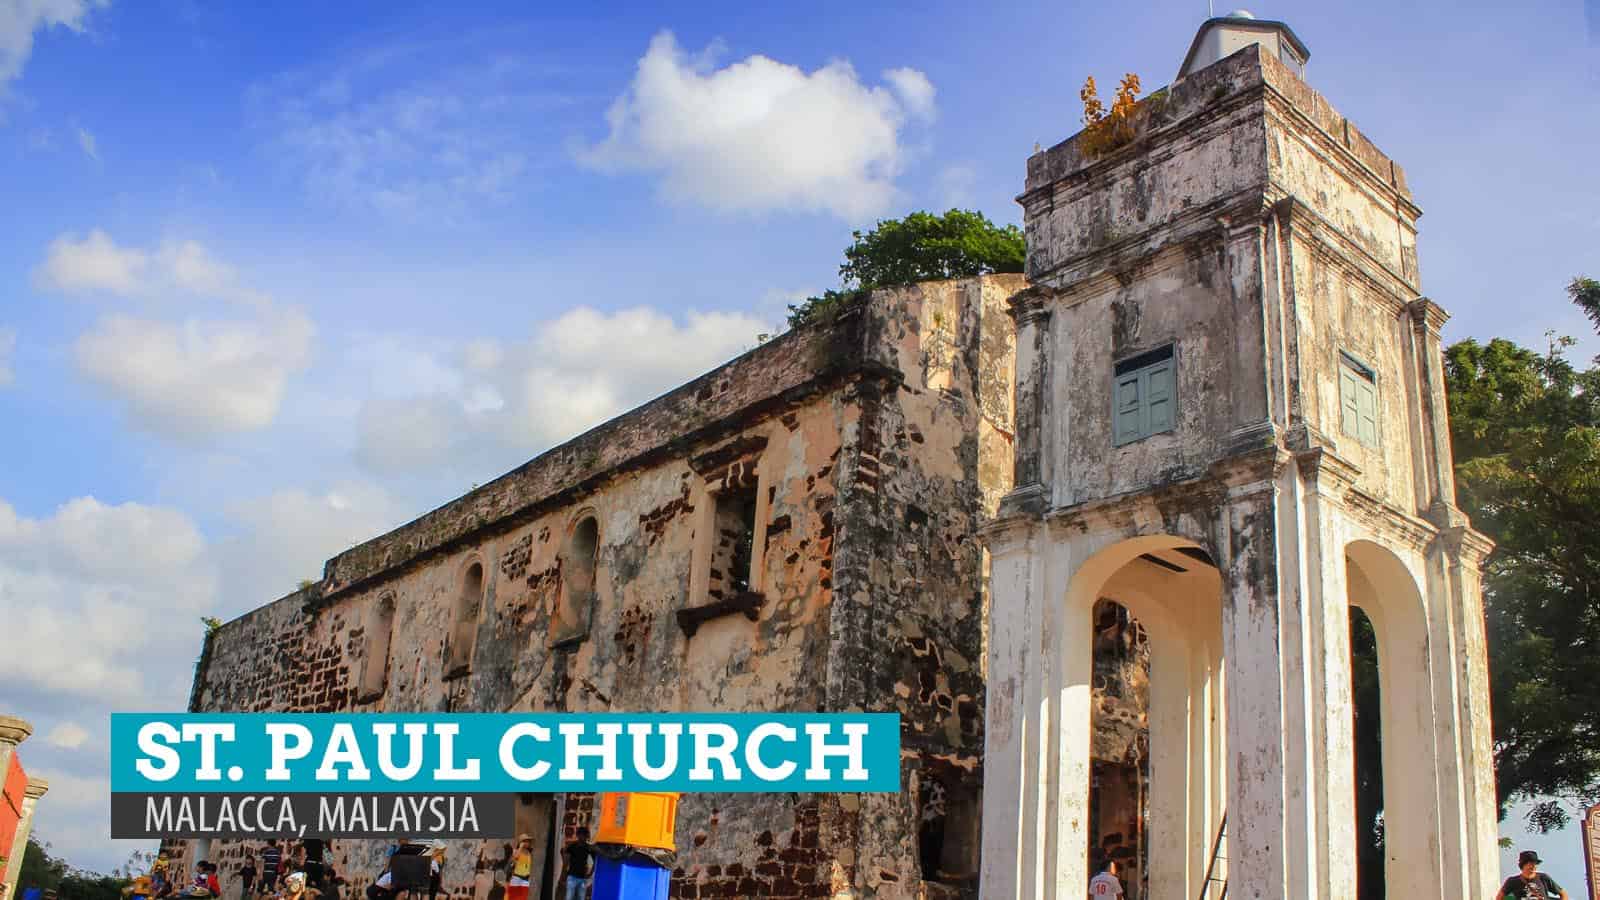 ST. PAUL CHURCH and the Writings on the Wall: Malacca, Malaysia